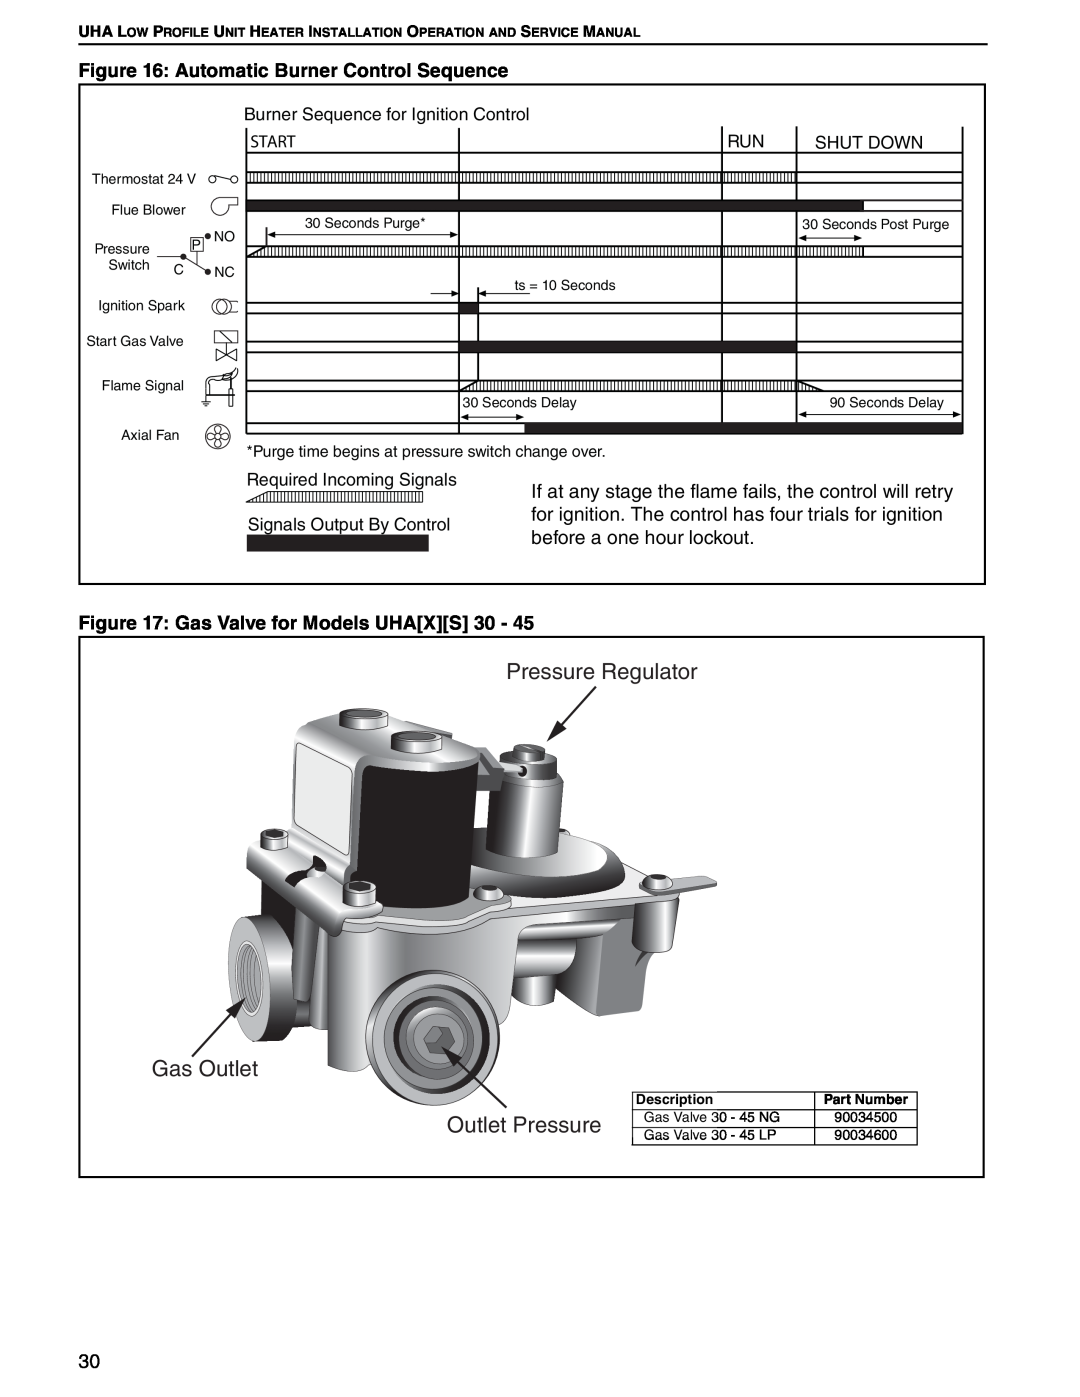 Roberts Gorden UHA[X][S] 45 Automatic Burner Control Sequence, Gas Valve for Models UHAXS 30, Pressure Regulator, Start 